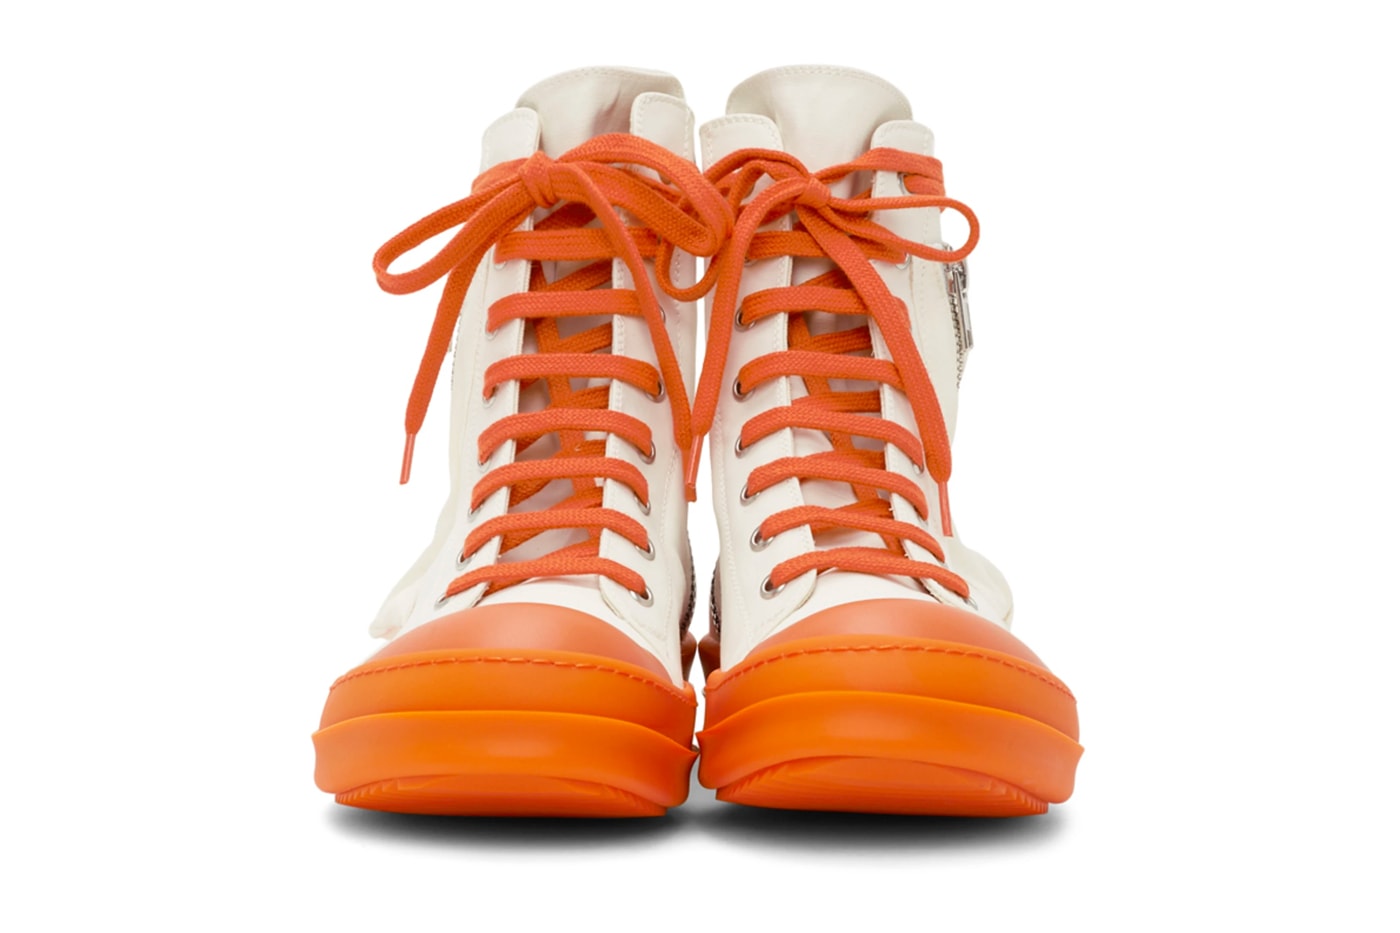 Rick Owens DRKSHDW Bauhaus Sneaker White Orange Release Info Buy Price 